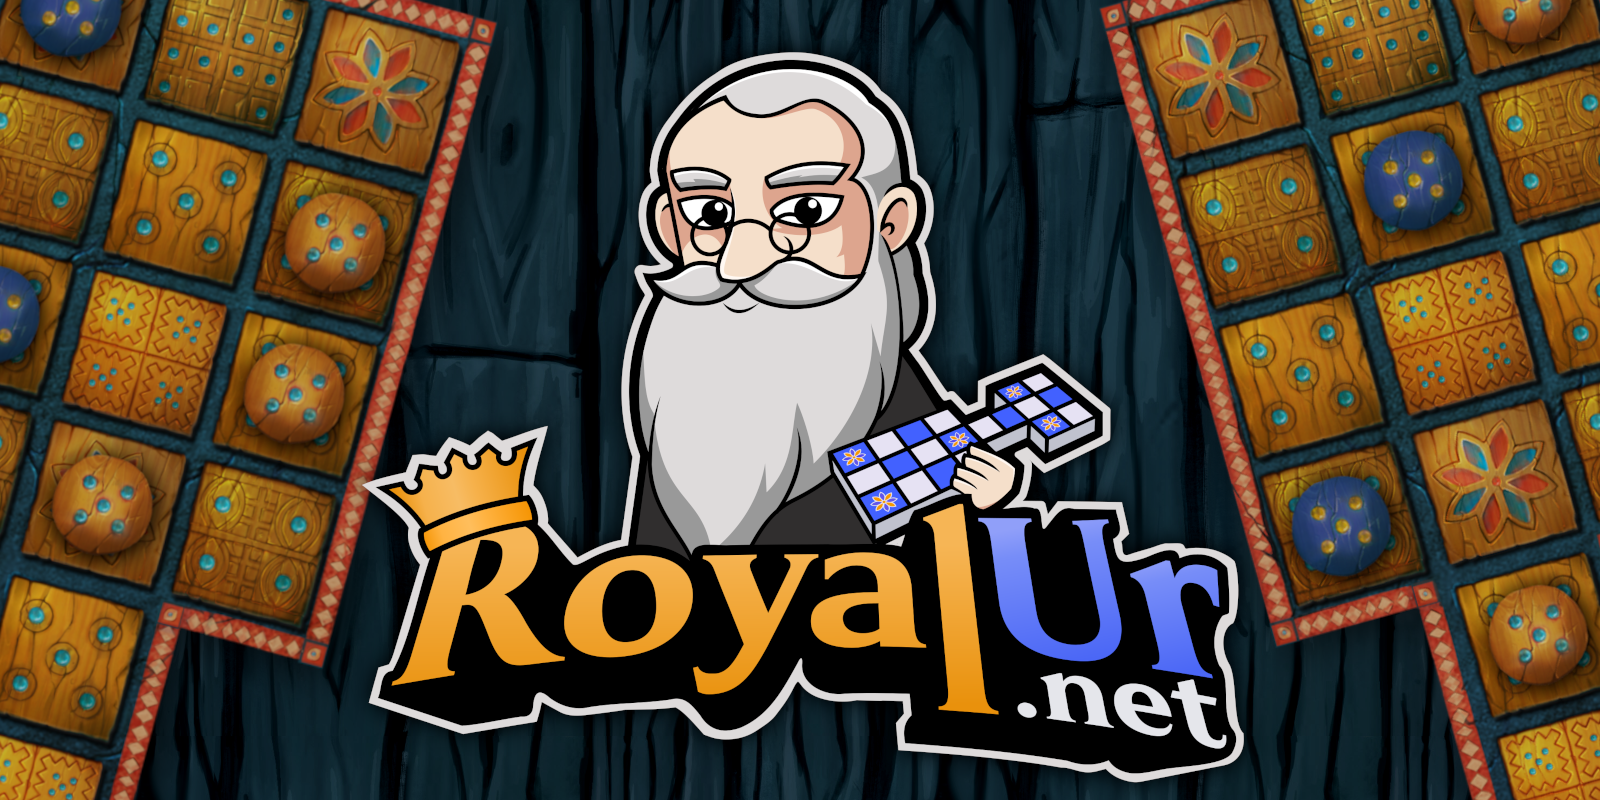 RoyalUr.net logo